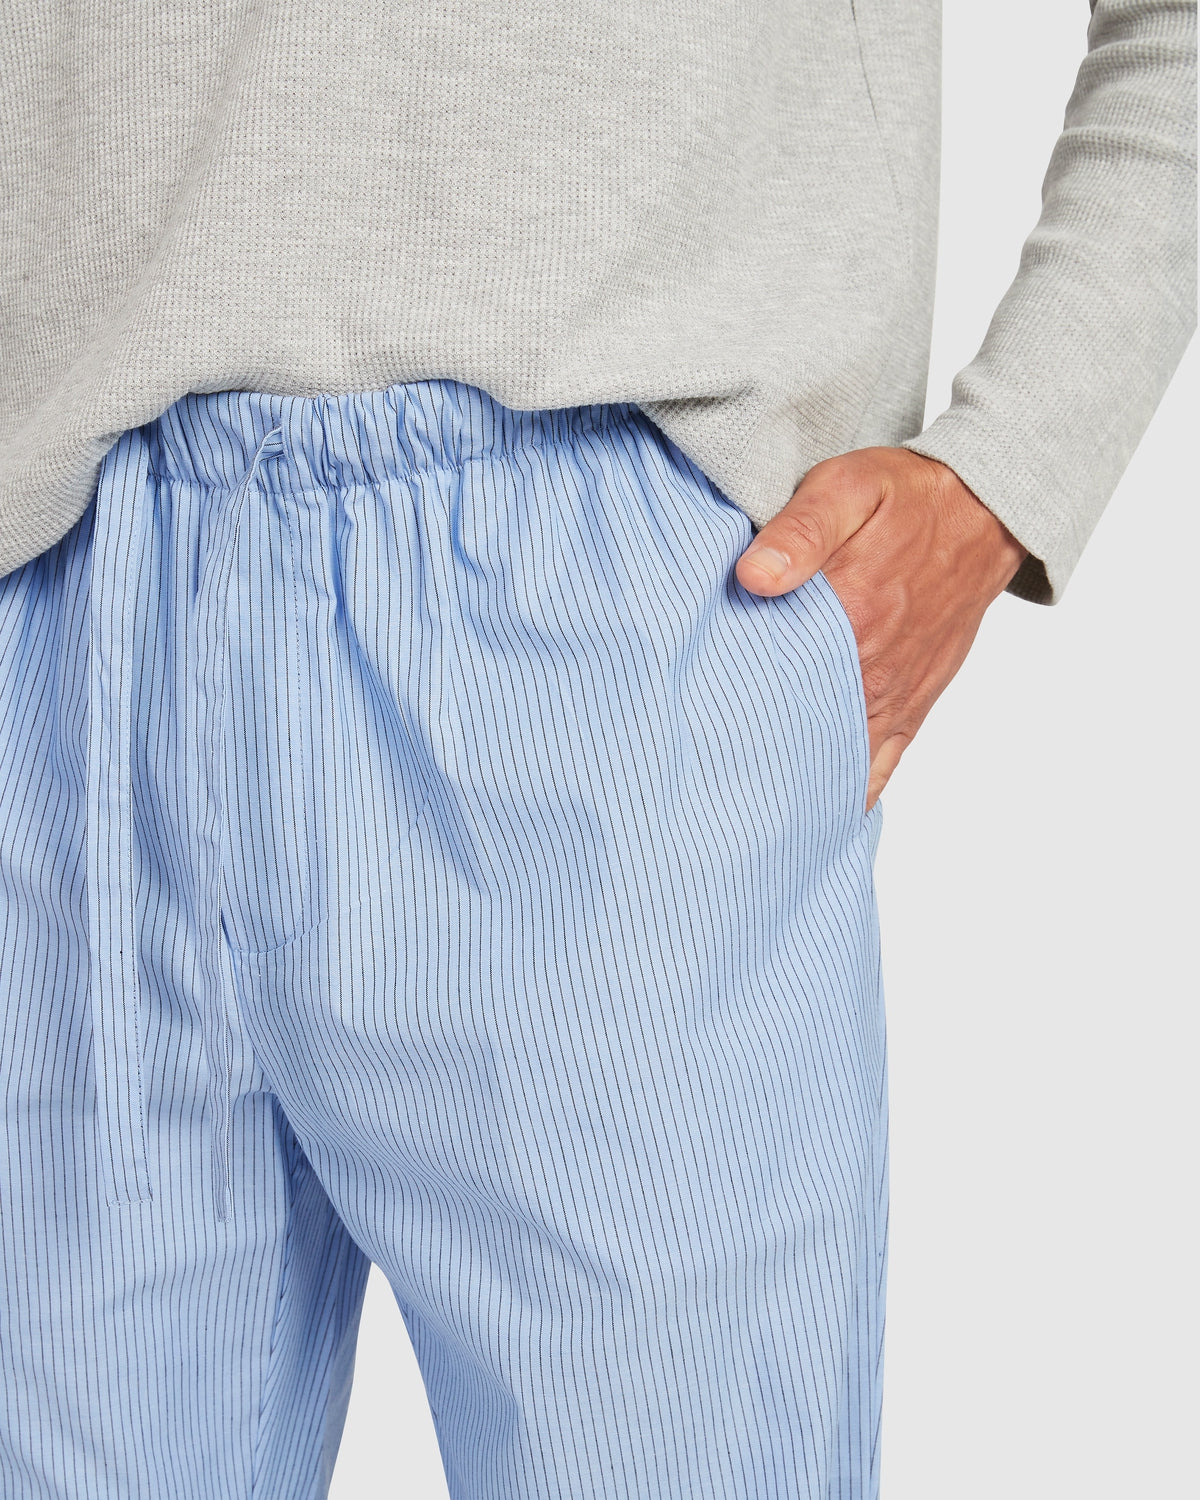 Load image into Gallery viewer, Unisex Cotton Man Pant - Placid Blue Black Stripe
